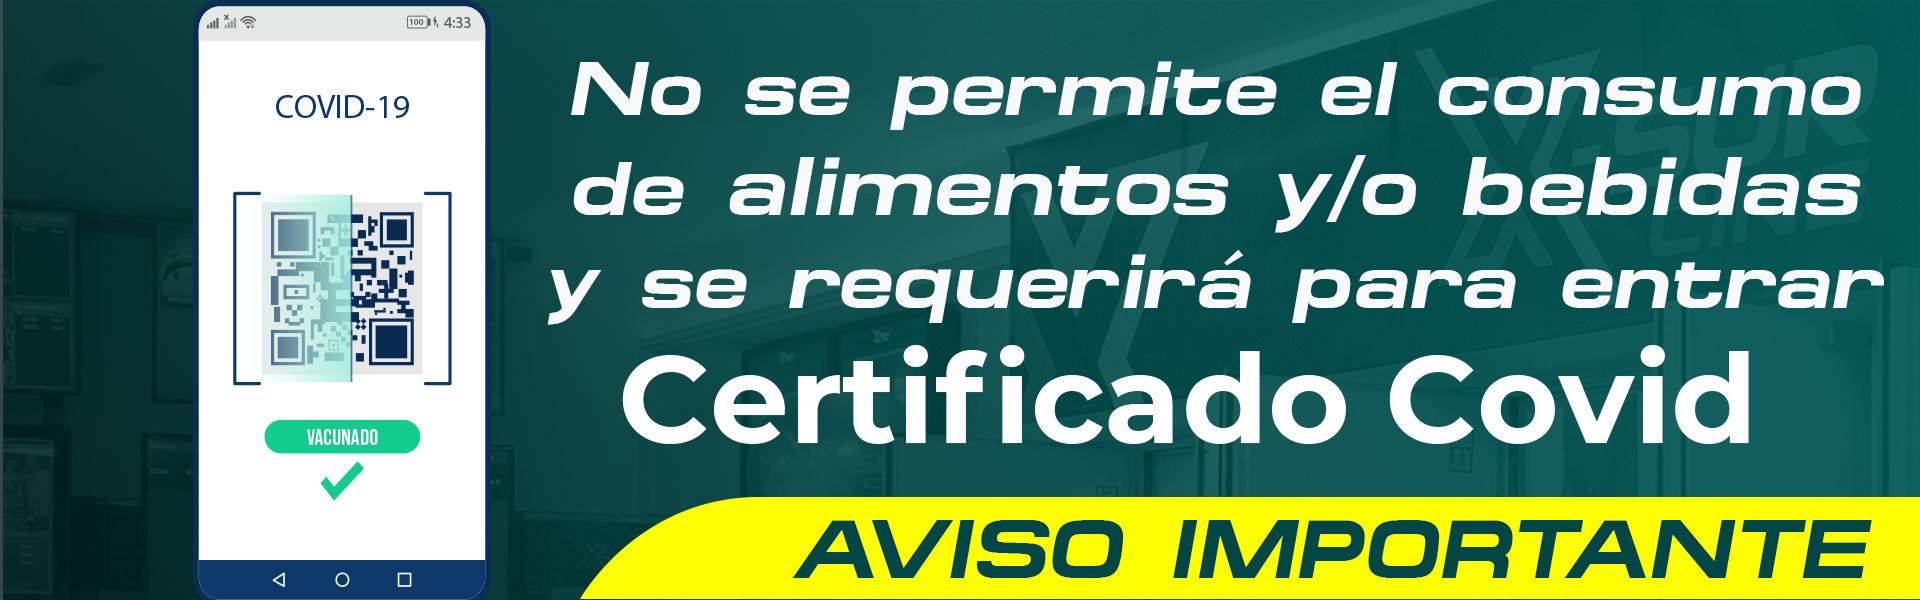 Certificado Covid Web_2